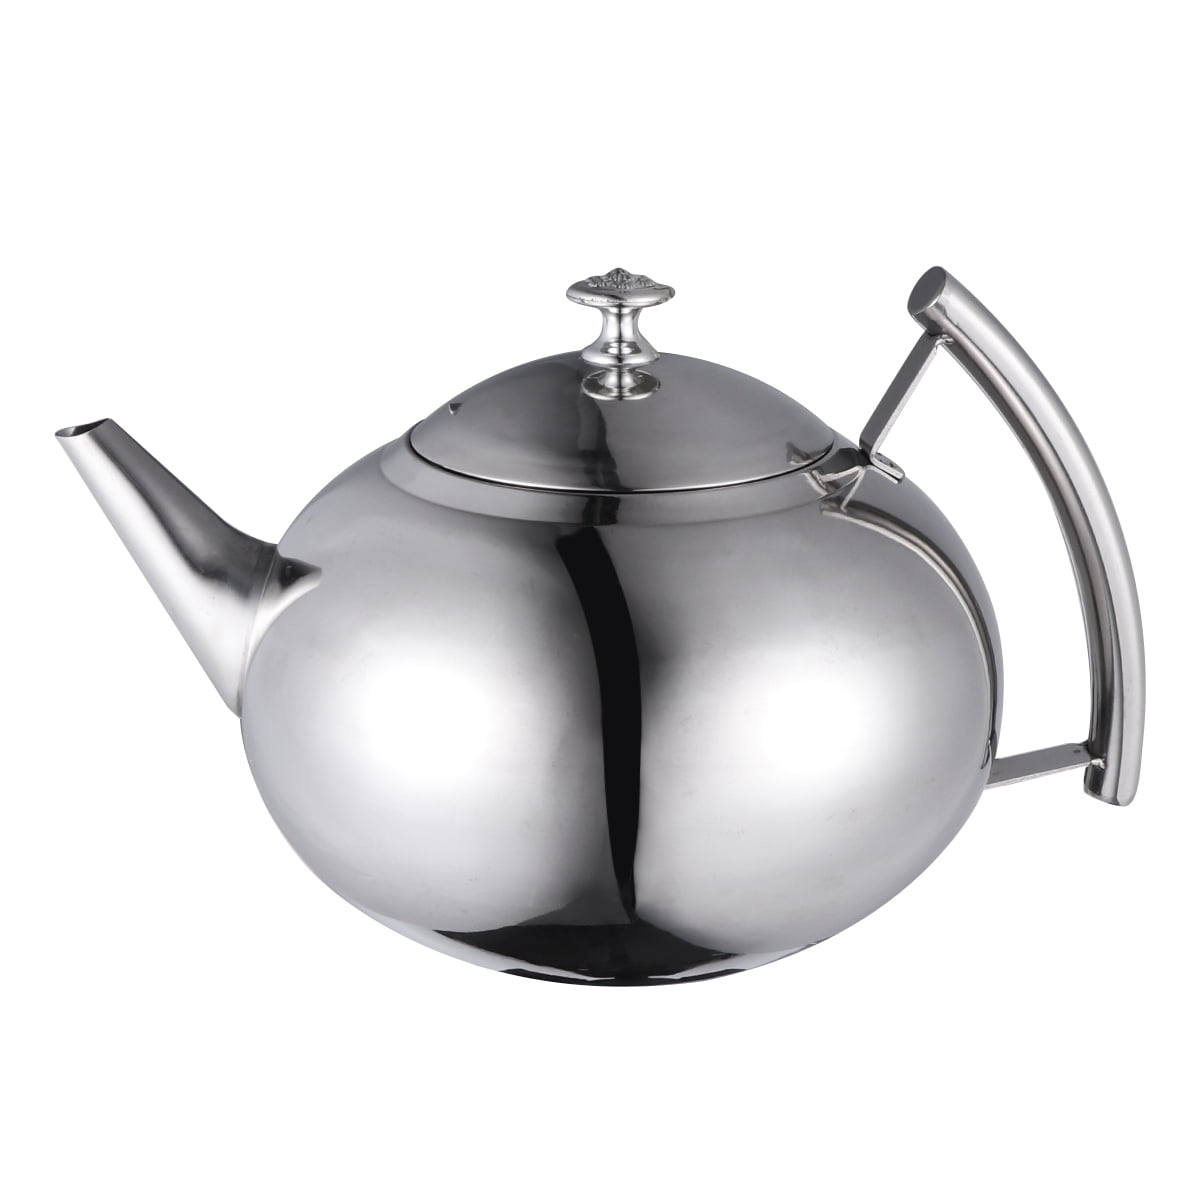 Luvan 44oz Glass Tea Kettle with Infuser,1.3L Clear Tea Pot for Loose  Tea,Glass Teapot Blooming Tea